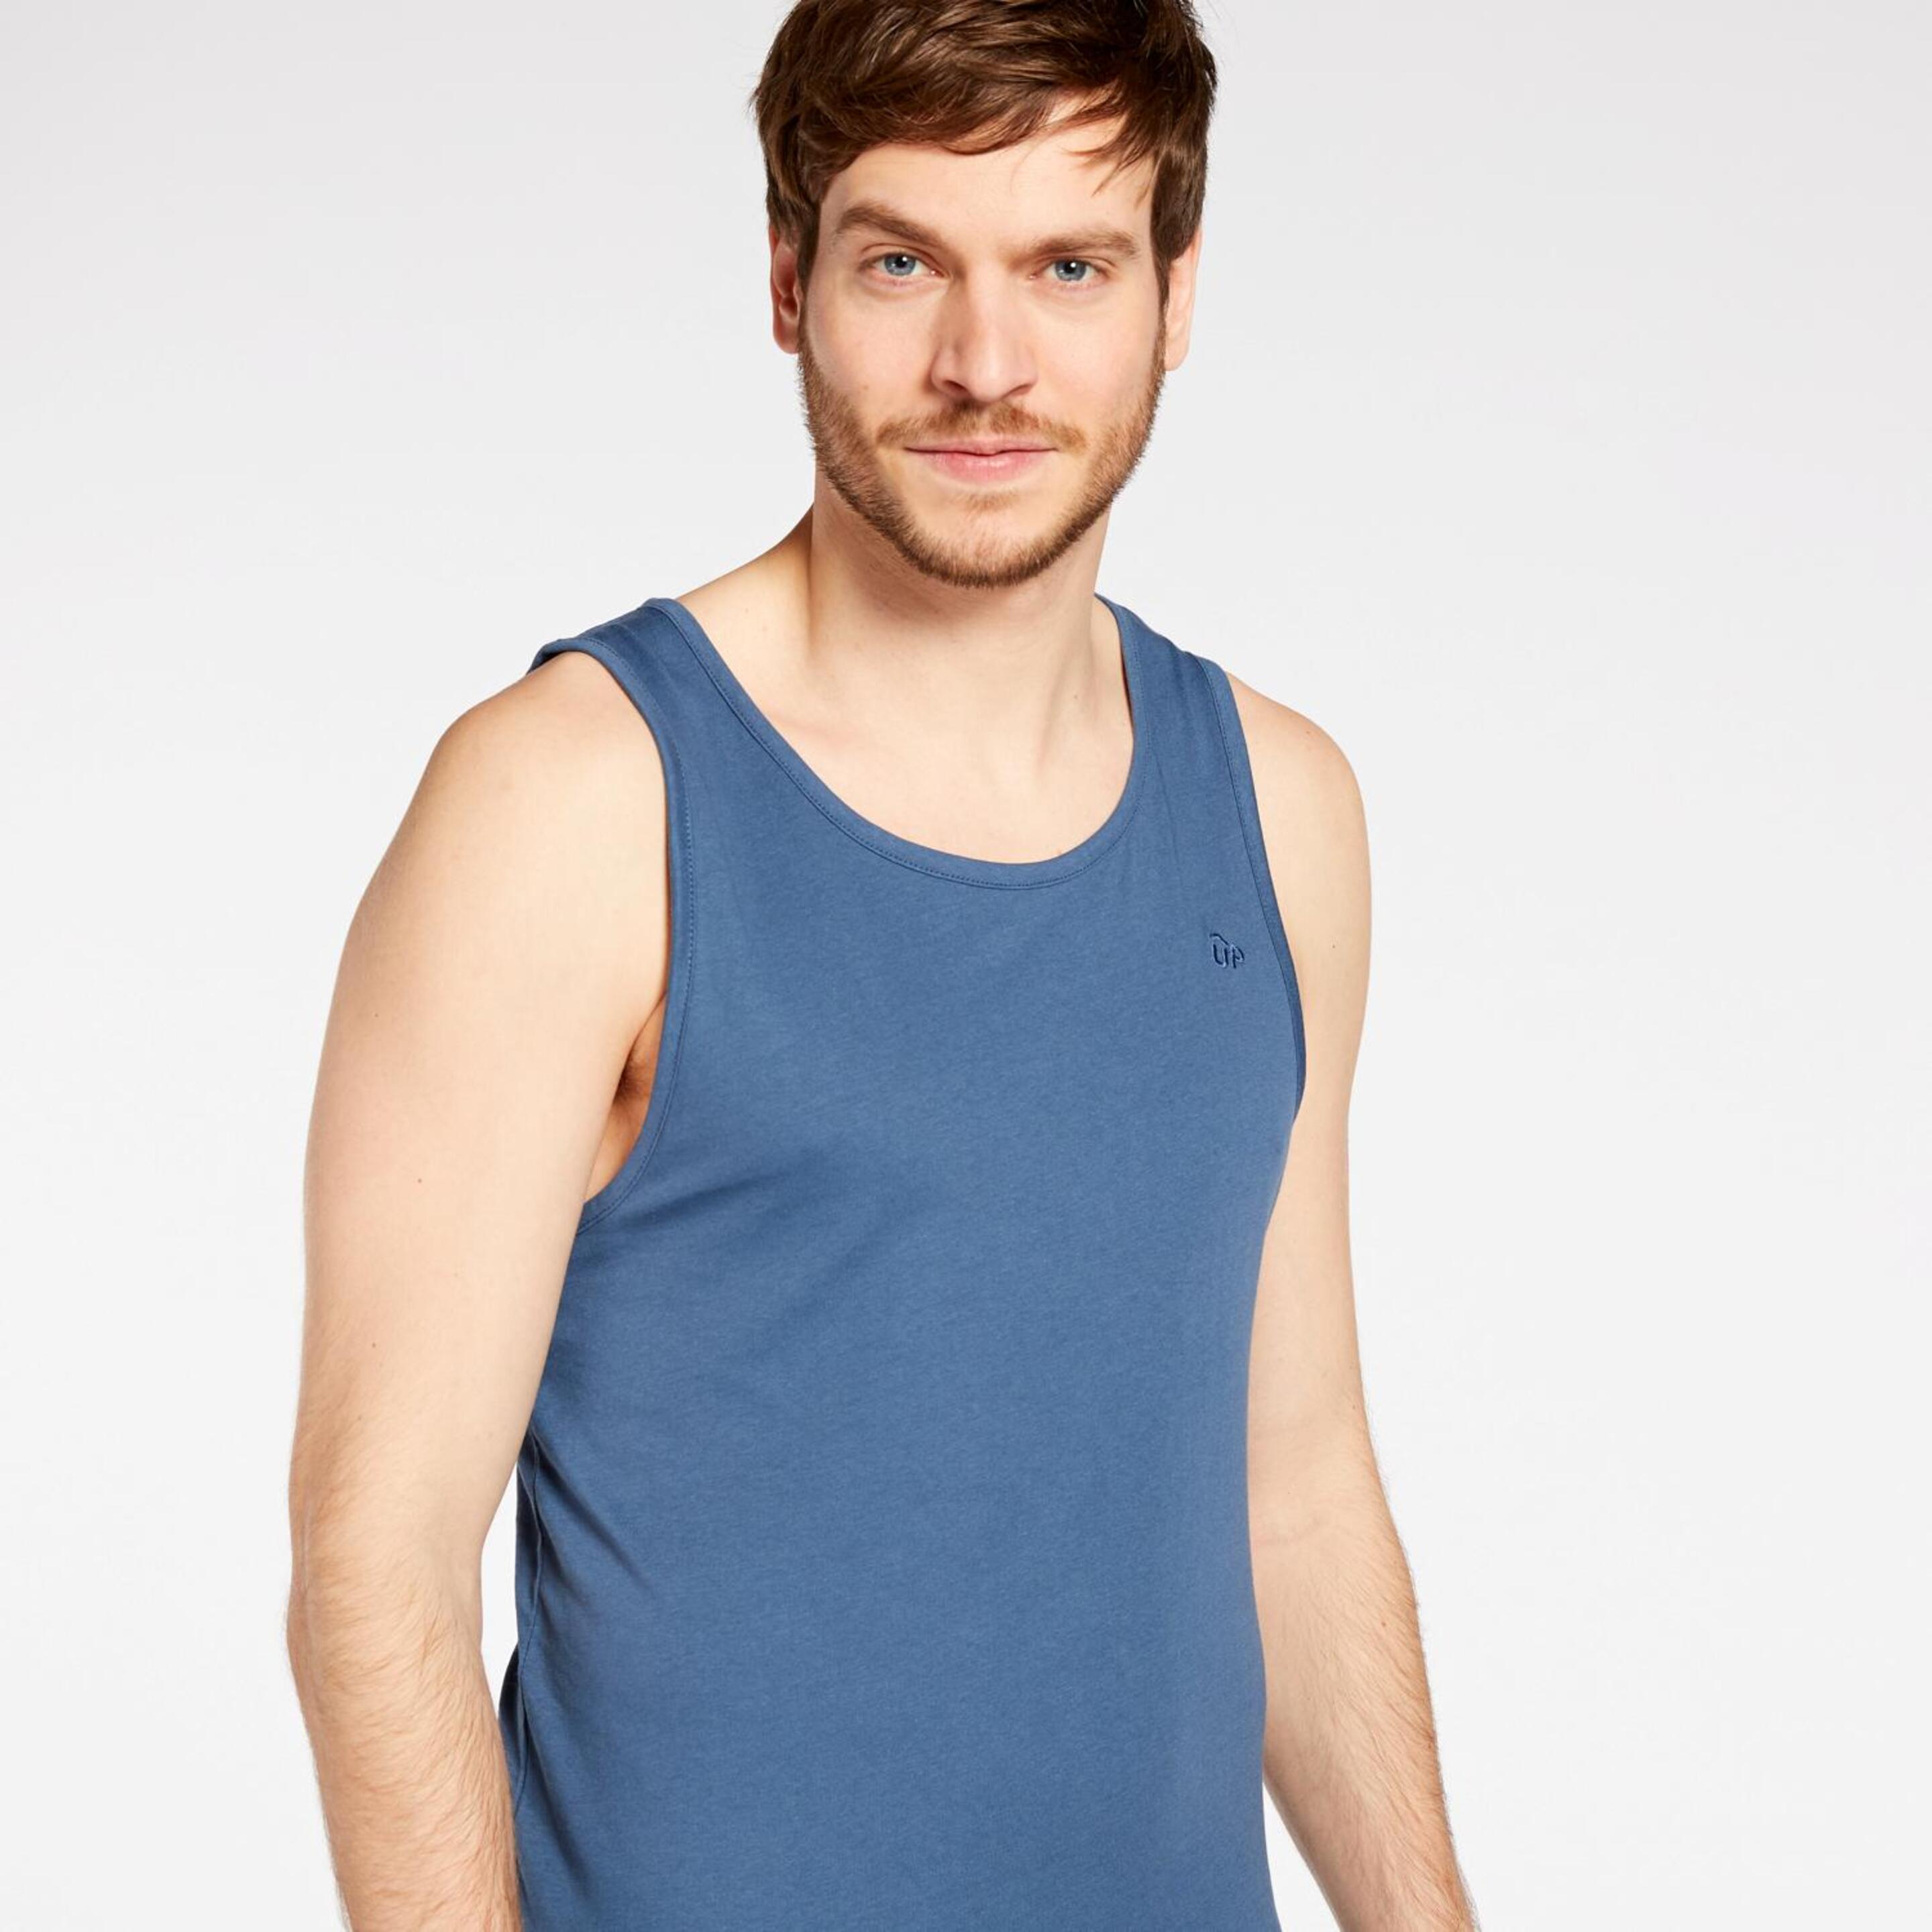 Up Basic - azul - Camiseta Tirantes Hombre